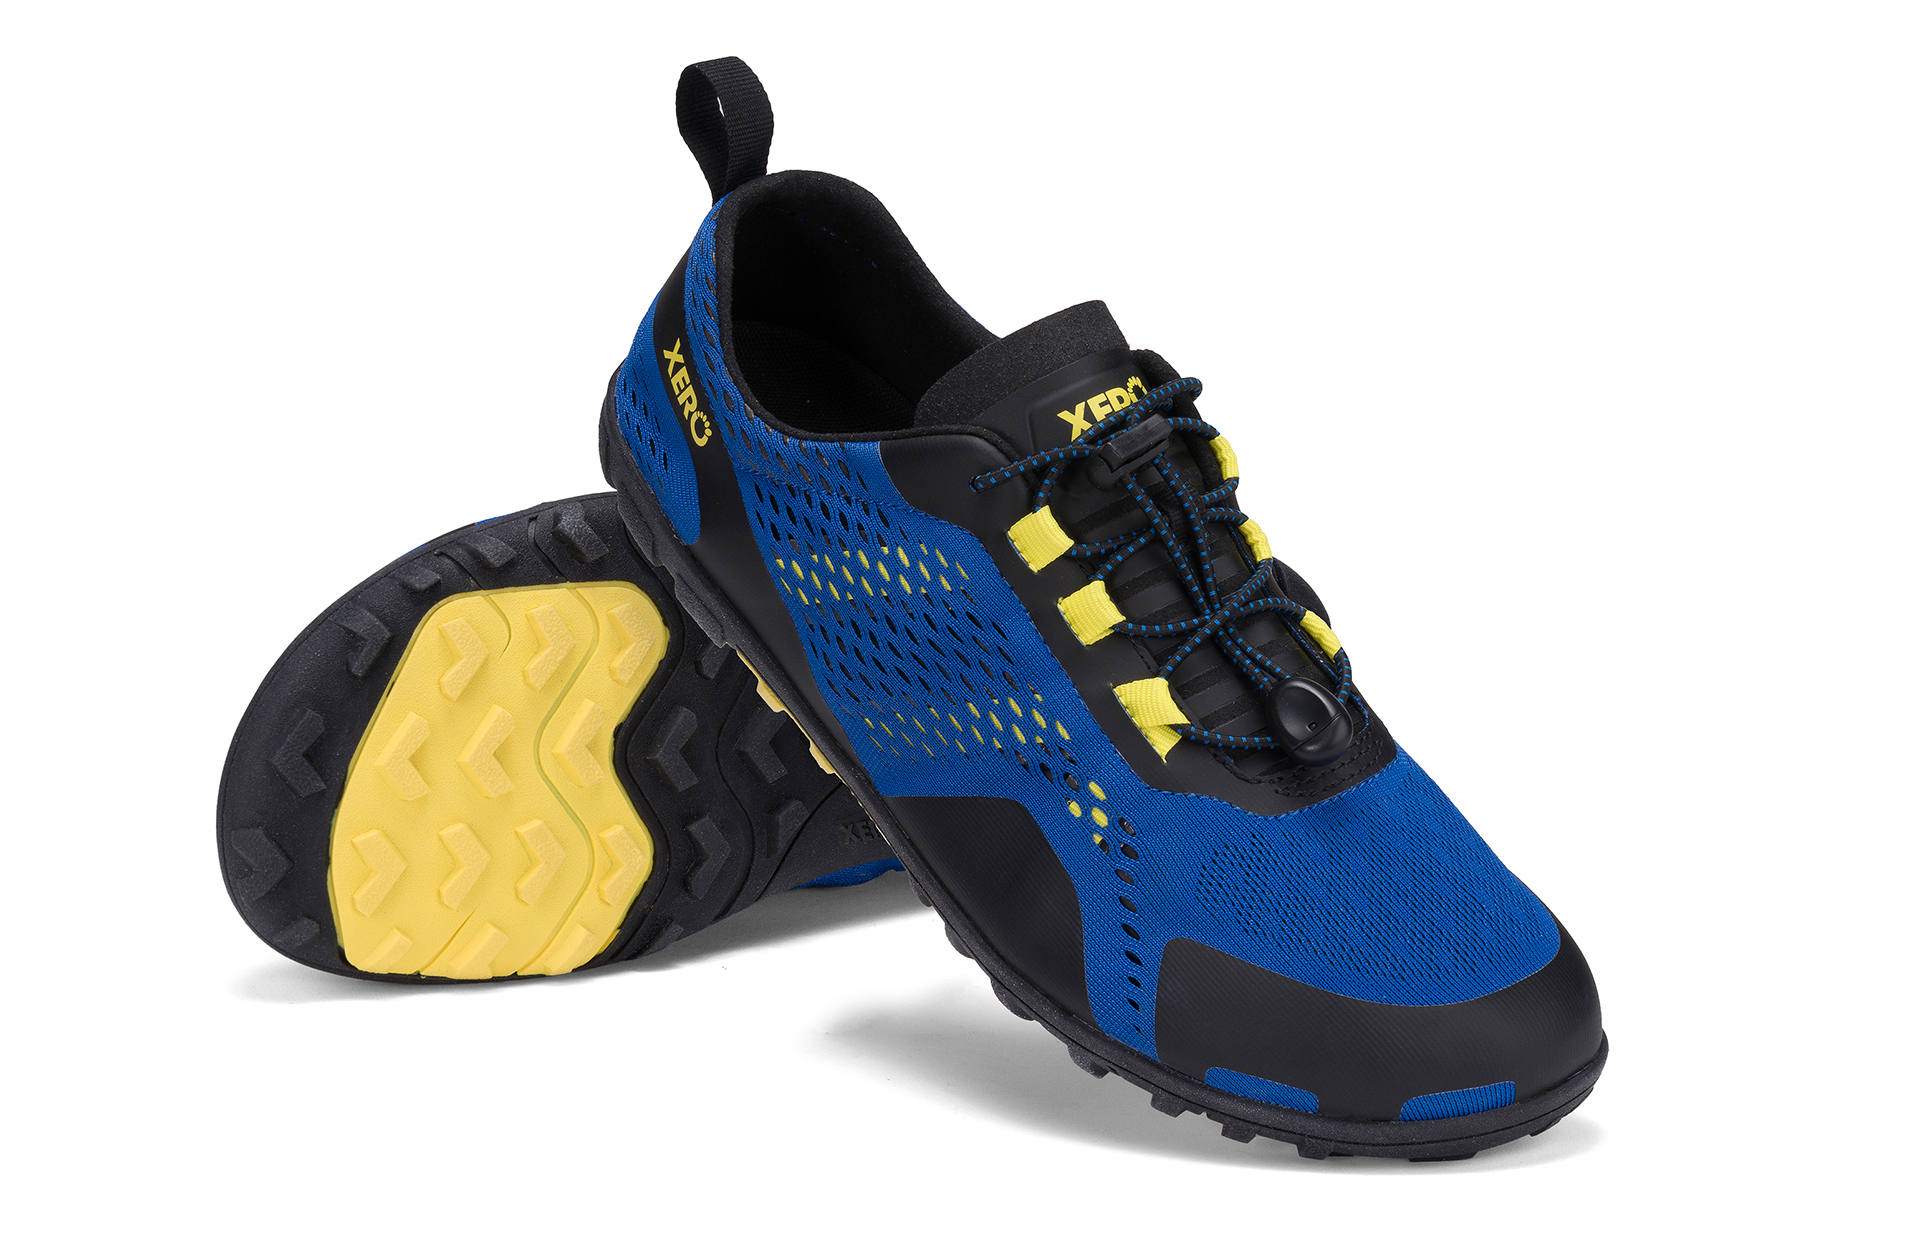 Xero Shoes Aqua X Sport in der Variante Blue Yellow